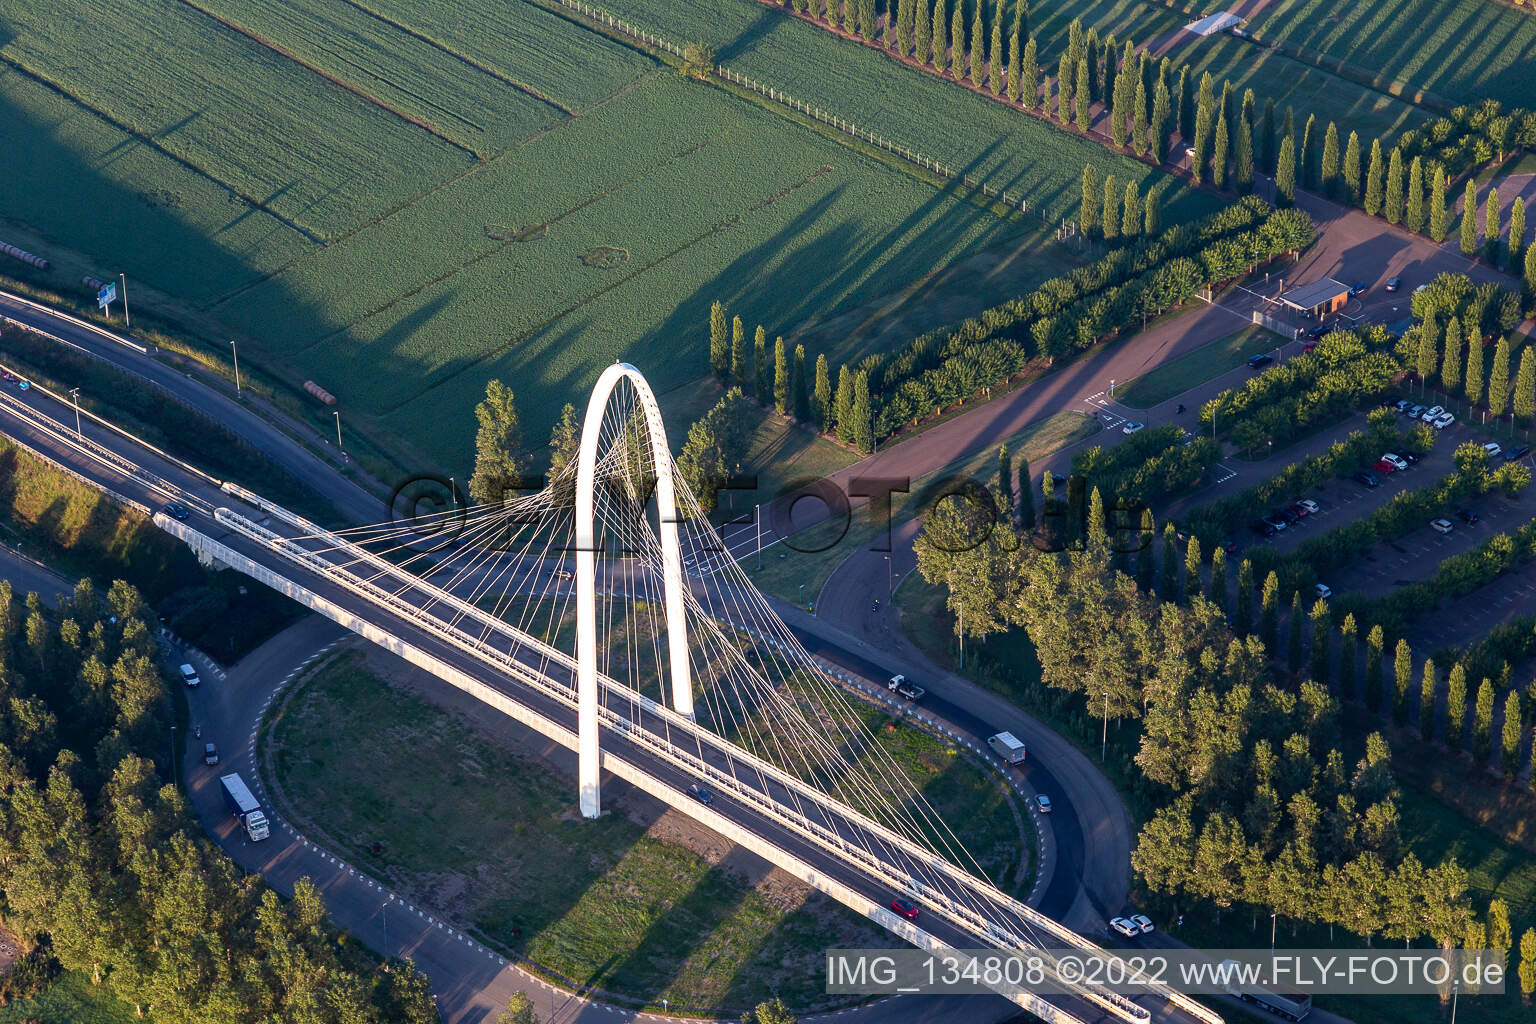 Luftbild von Brücke  Vela di Calatrava NORD über die Schnellbahntrasse und Autostrada del Sole in Reggio nell’Emilia im Bundesland Reggio Emilia, Italien